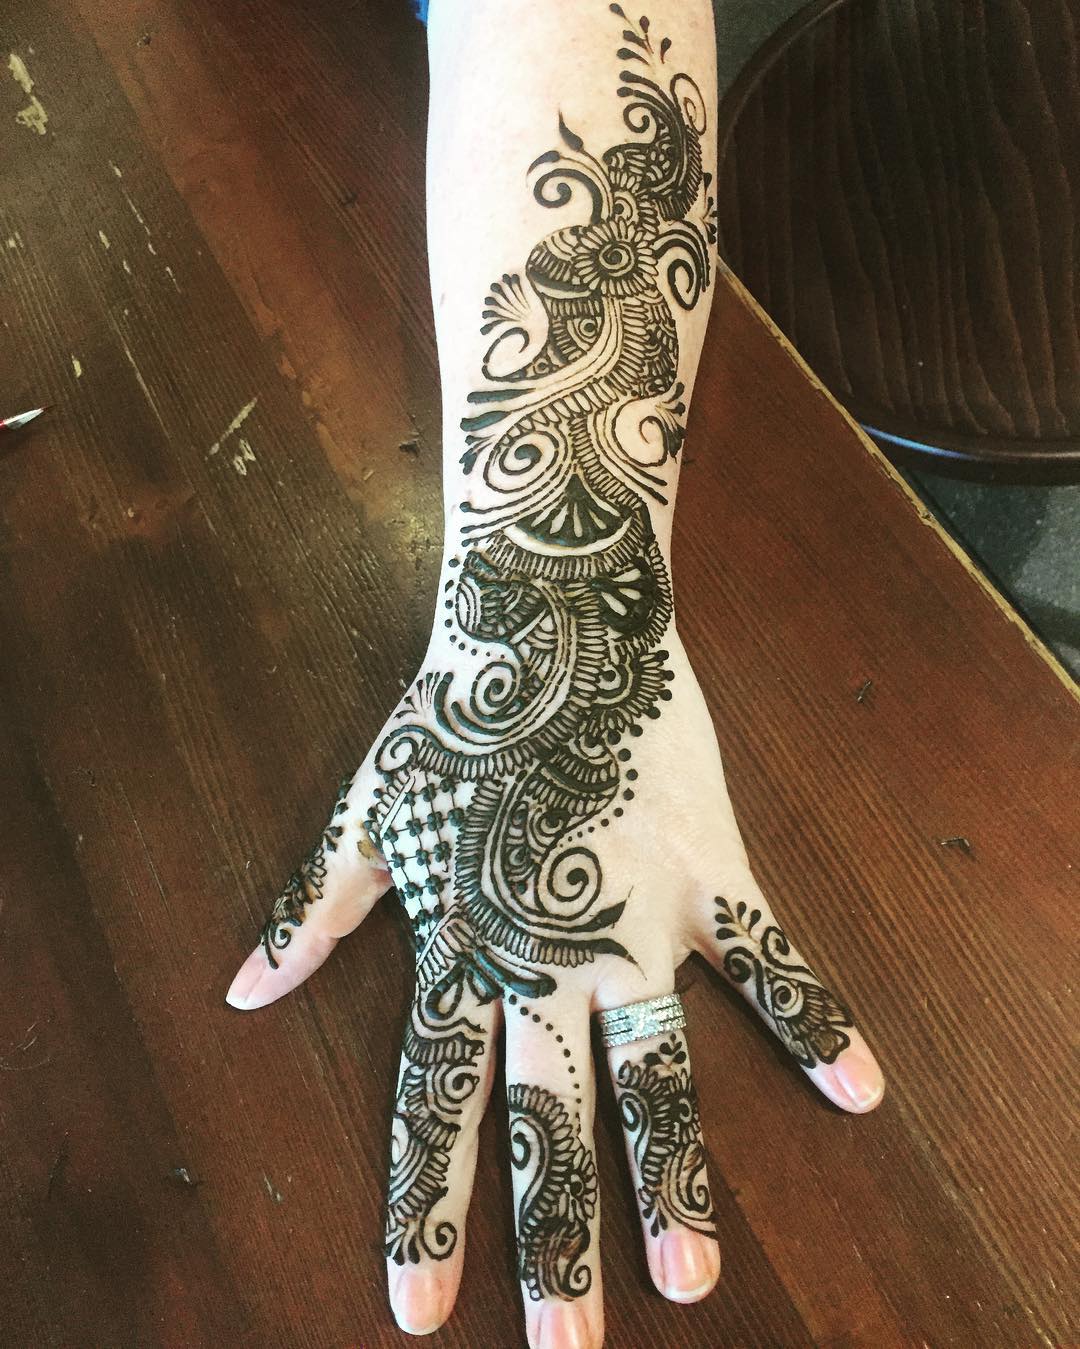 125 New Simple Mehndi Henna Designs for Hands Buzzpk